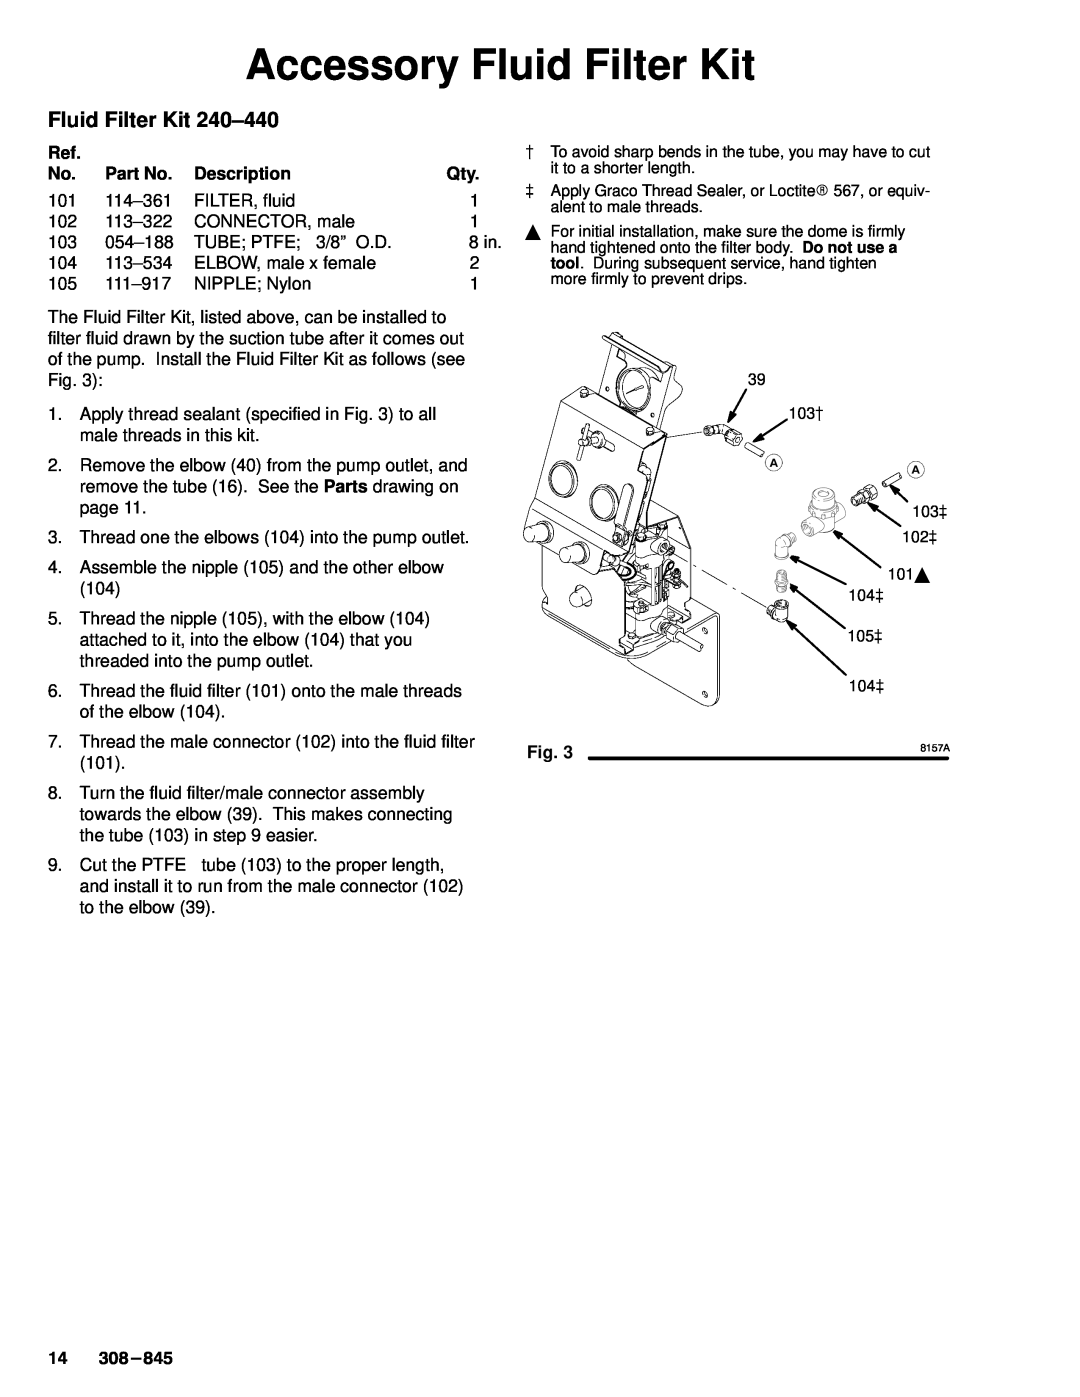 Hitachi 240353 manual Accessory Fluid Filter Kit, Description 